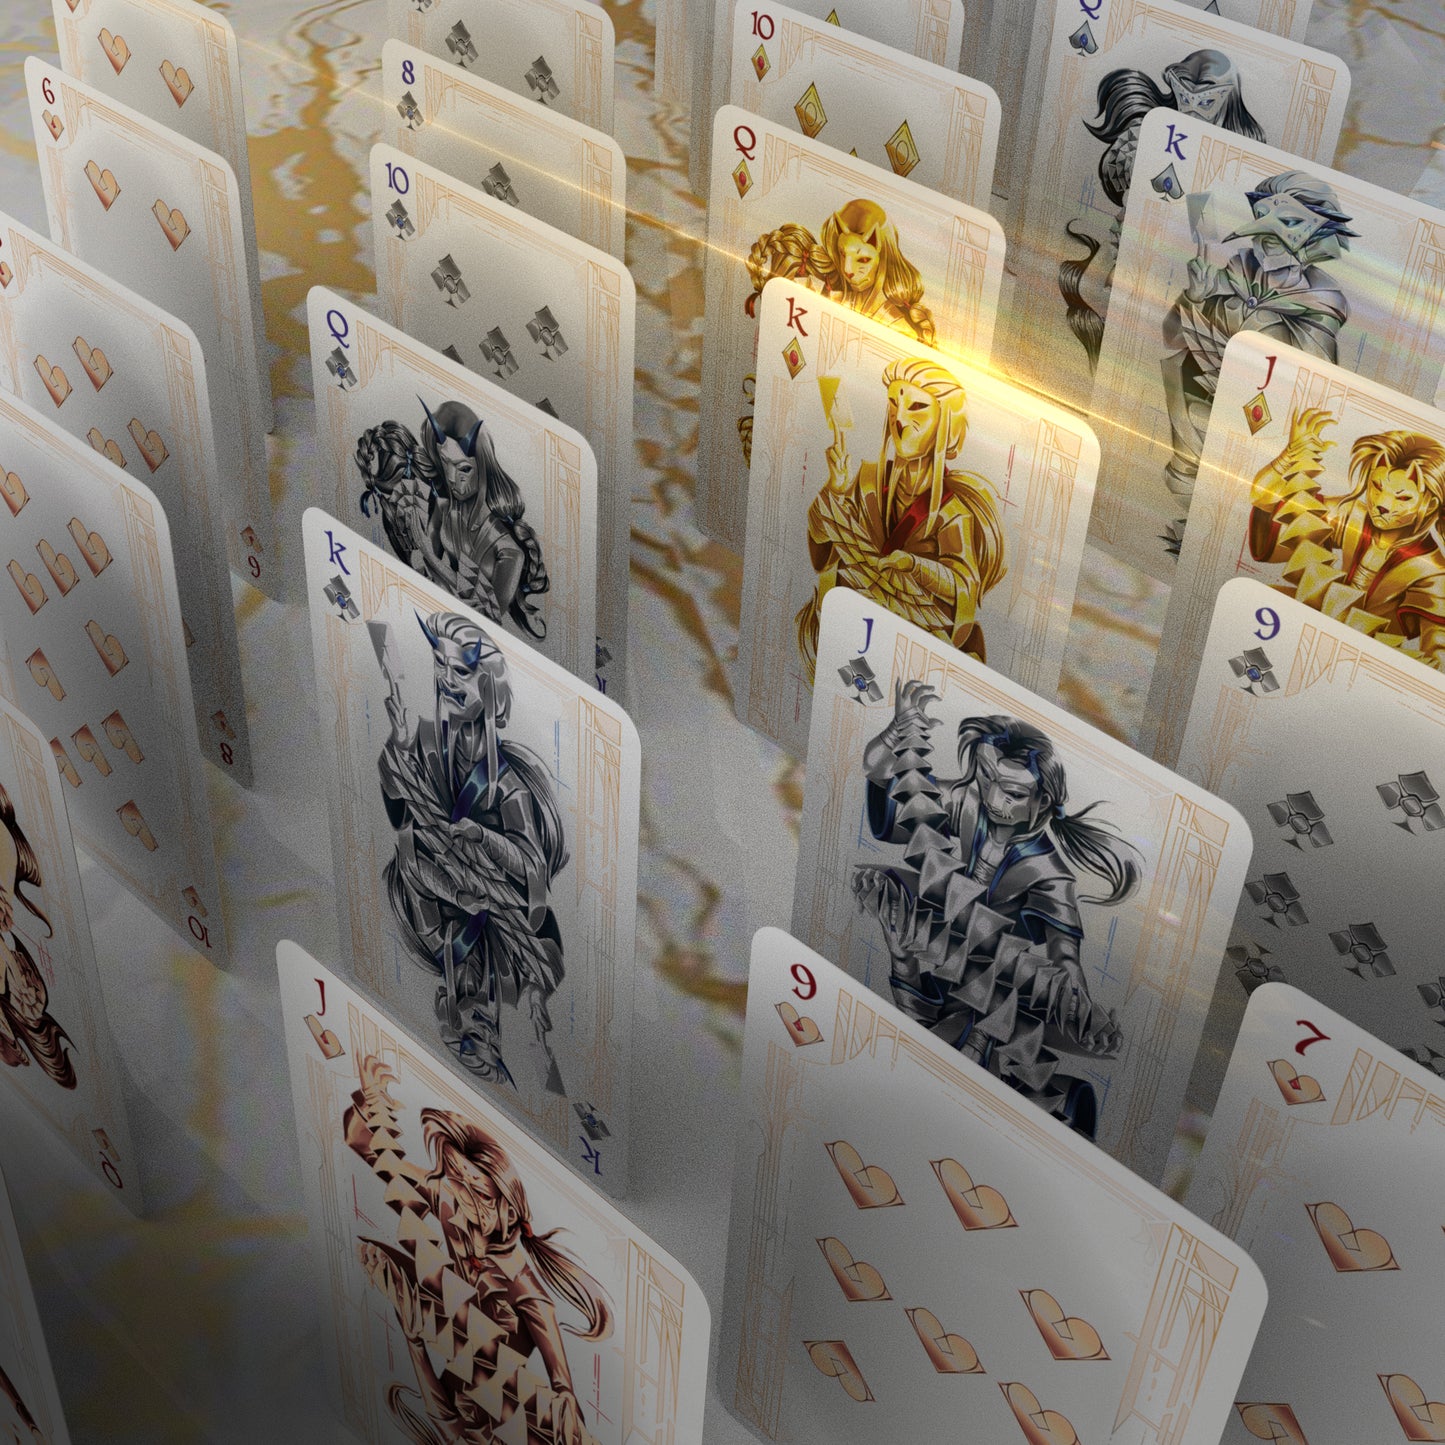 Card Masters Precious Metals casino with Foil Box